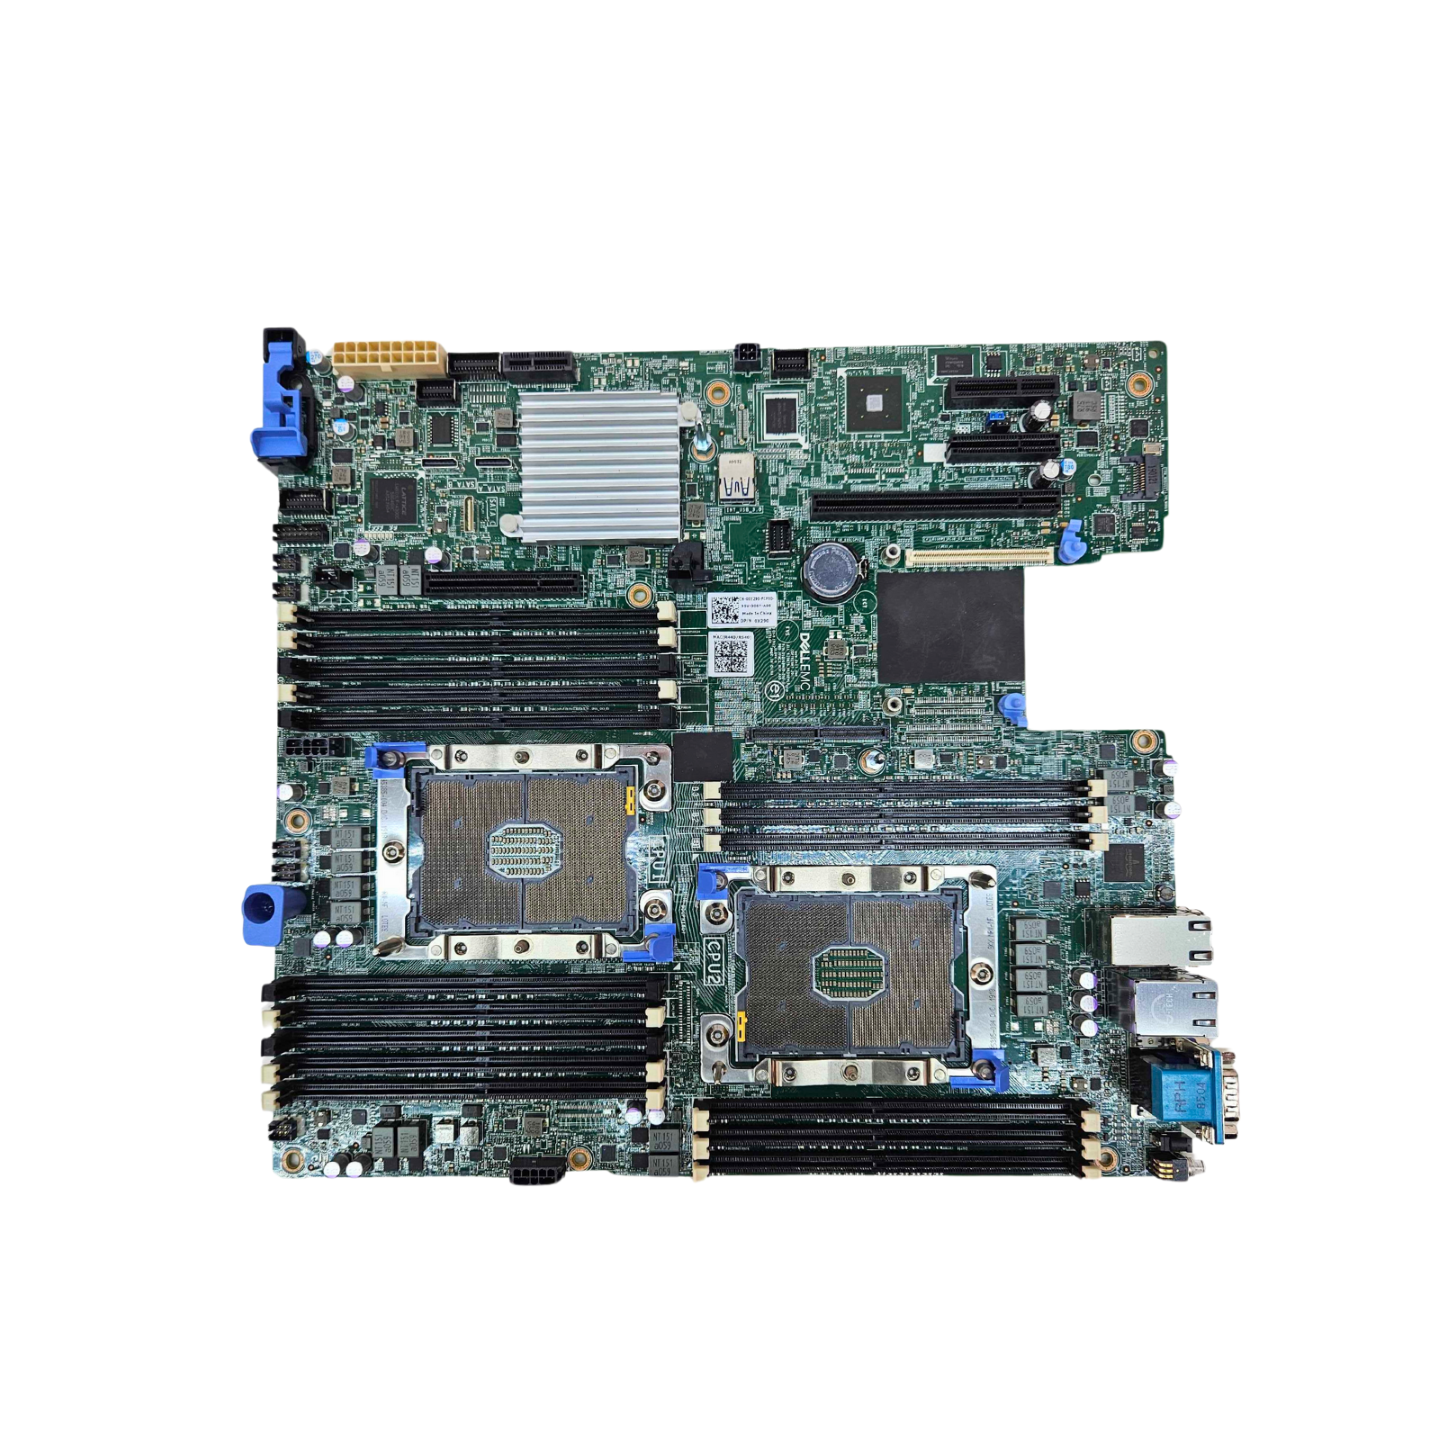 DELL EMC POWEREDGE R740XD2 SERVER MOTHERBOARD SYSTEM MAIN BOARD (0X290)